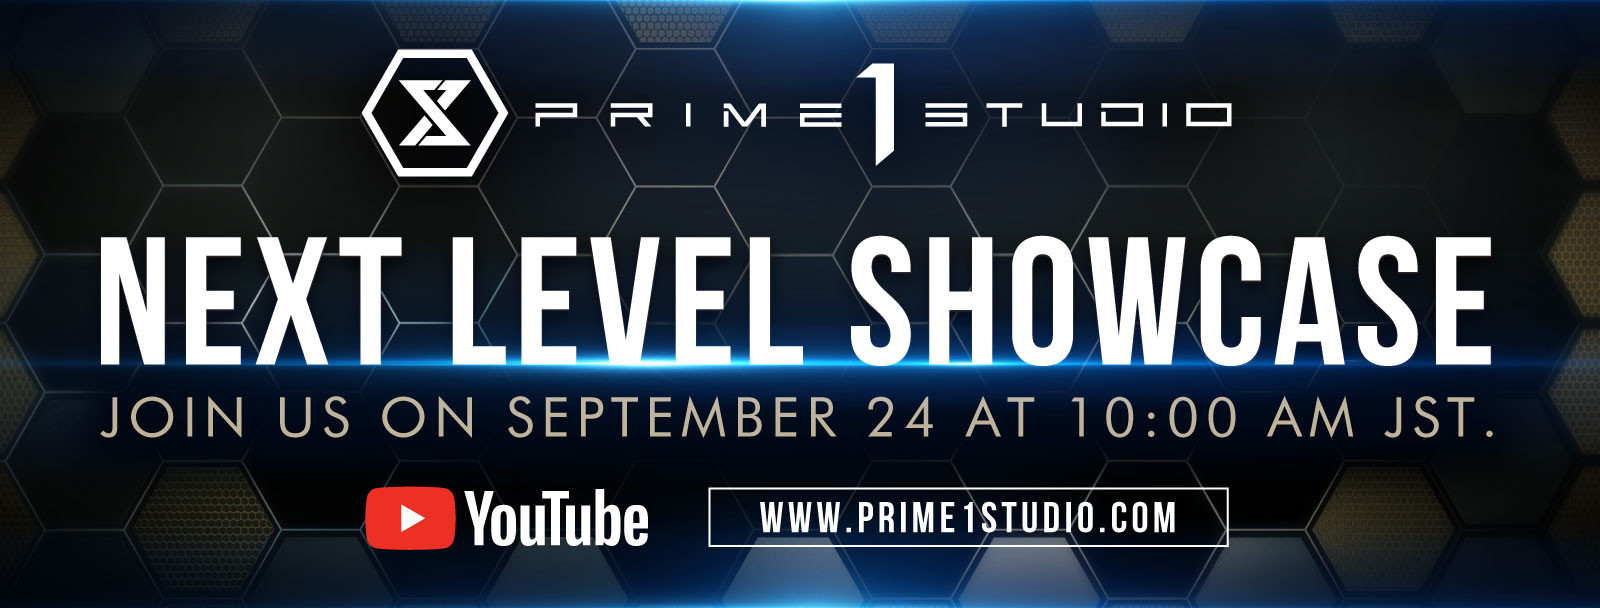 Prime 1 Studio Next Level Showcase 1 join us